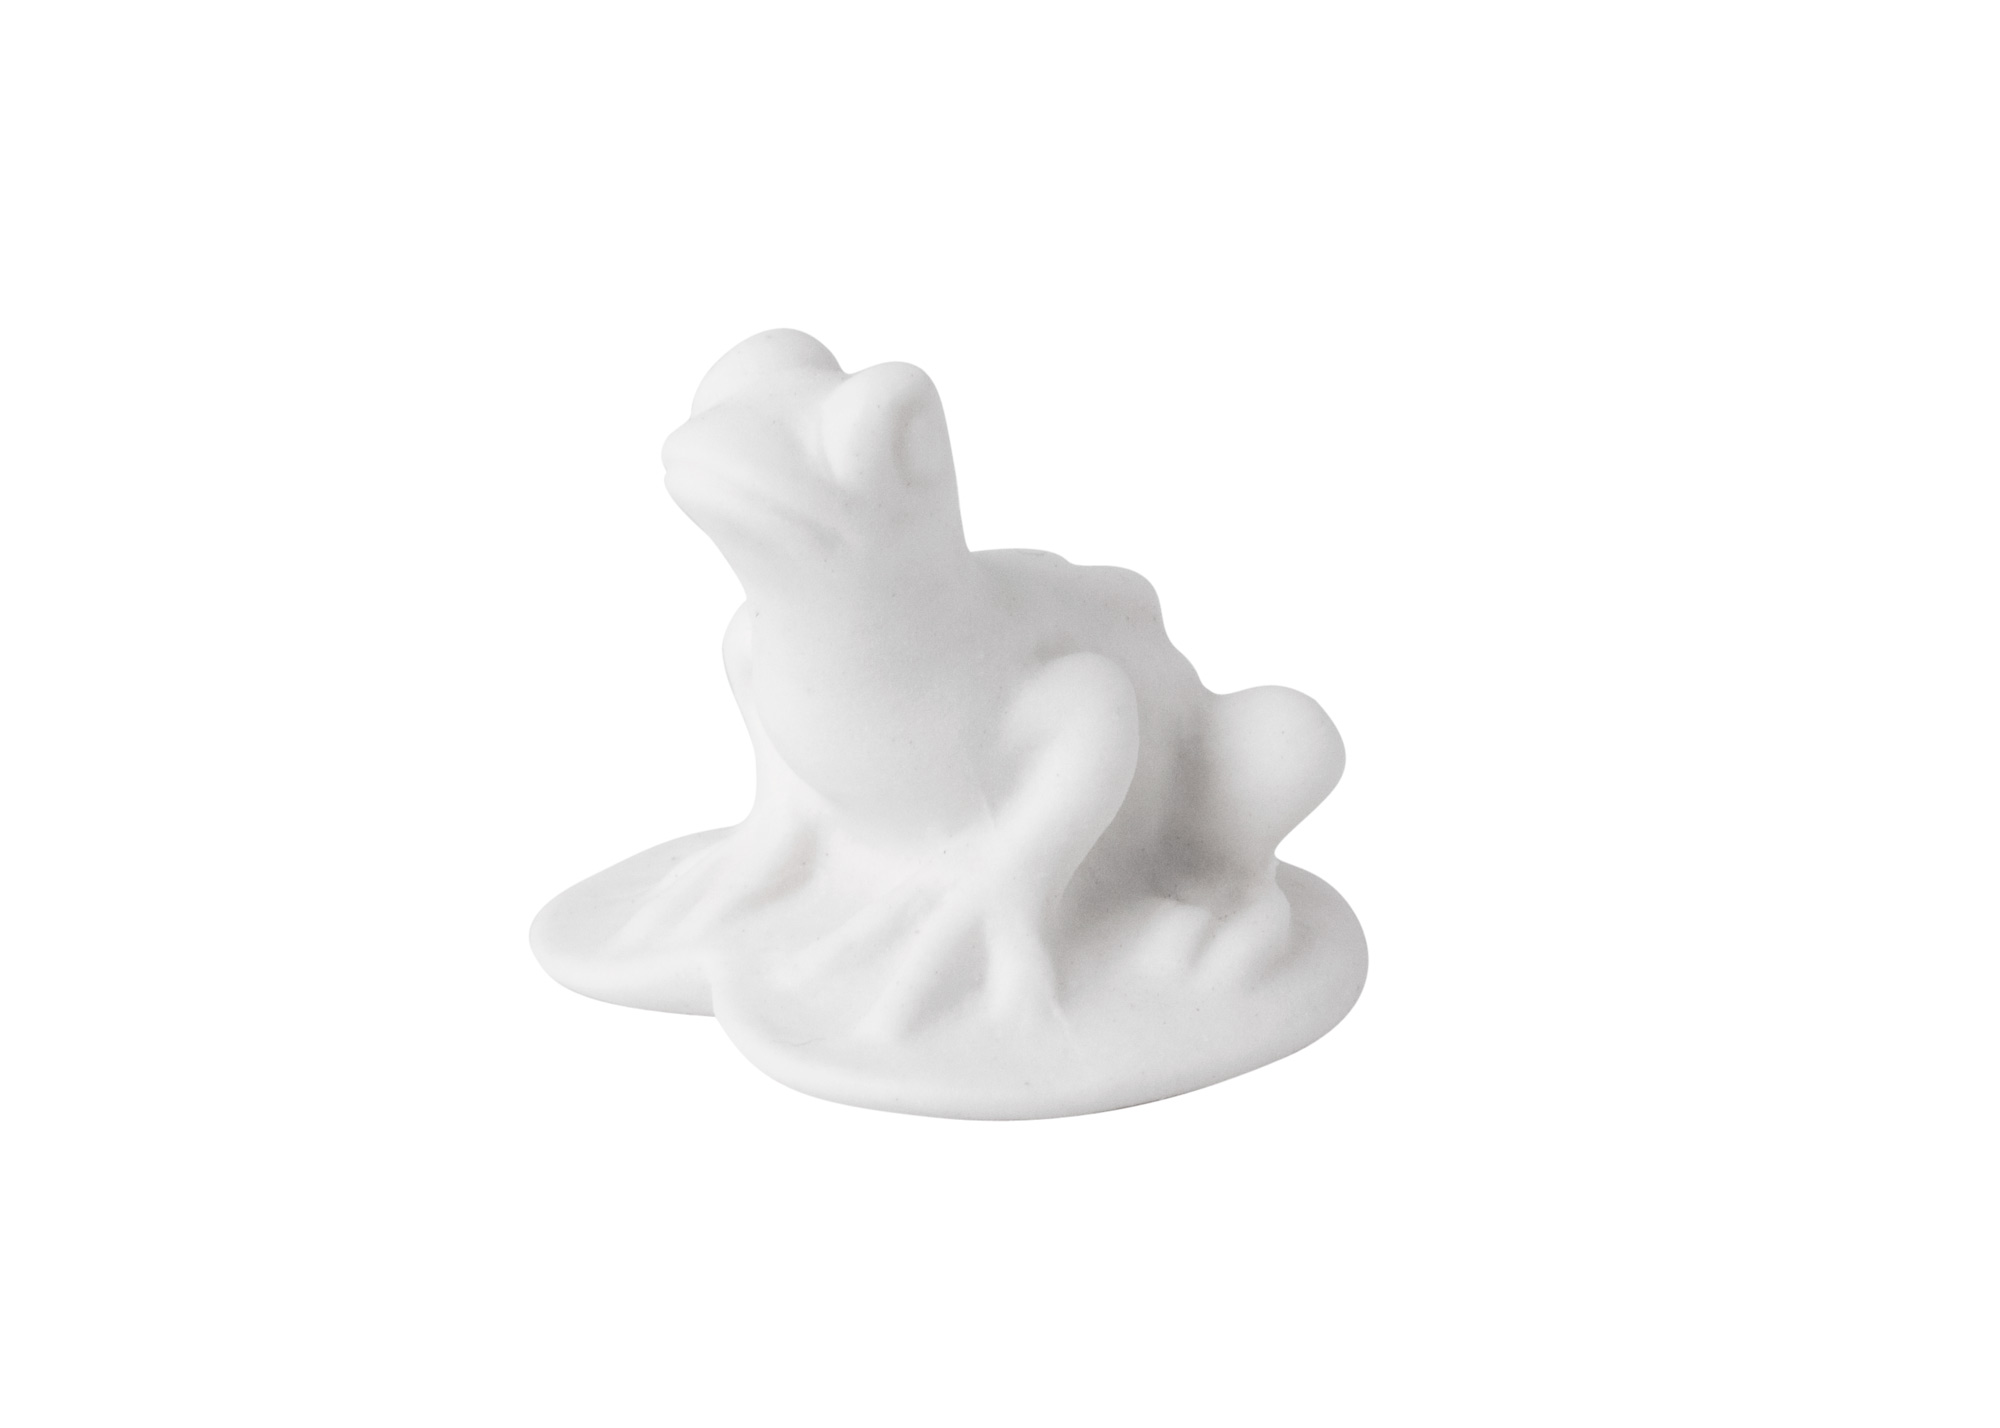 Buy Unglazed White Frog Figurine at GoldenCockerel.com